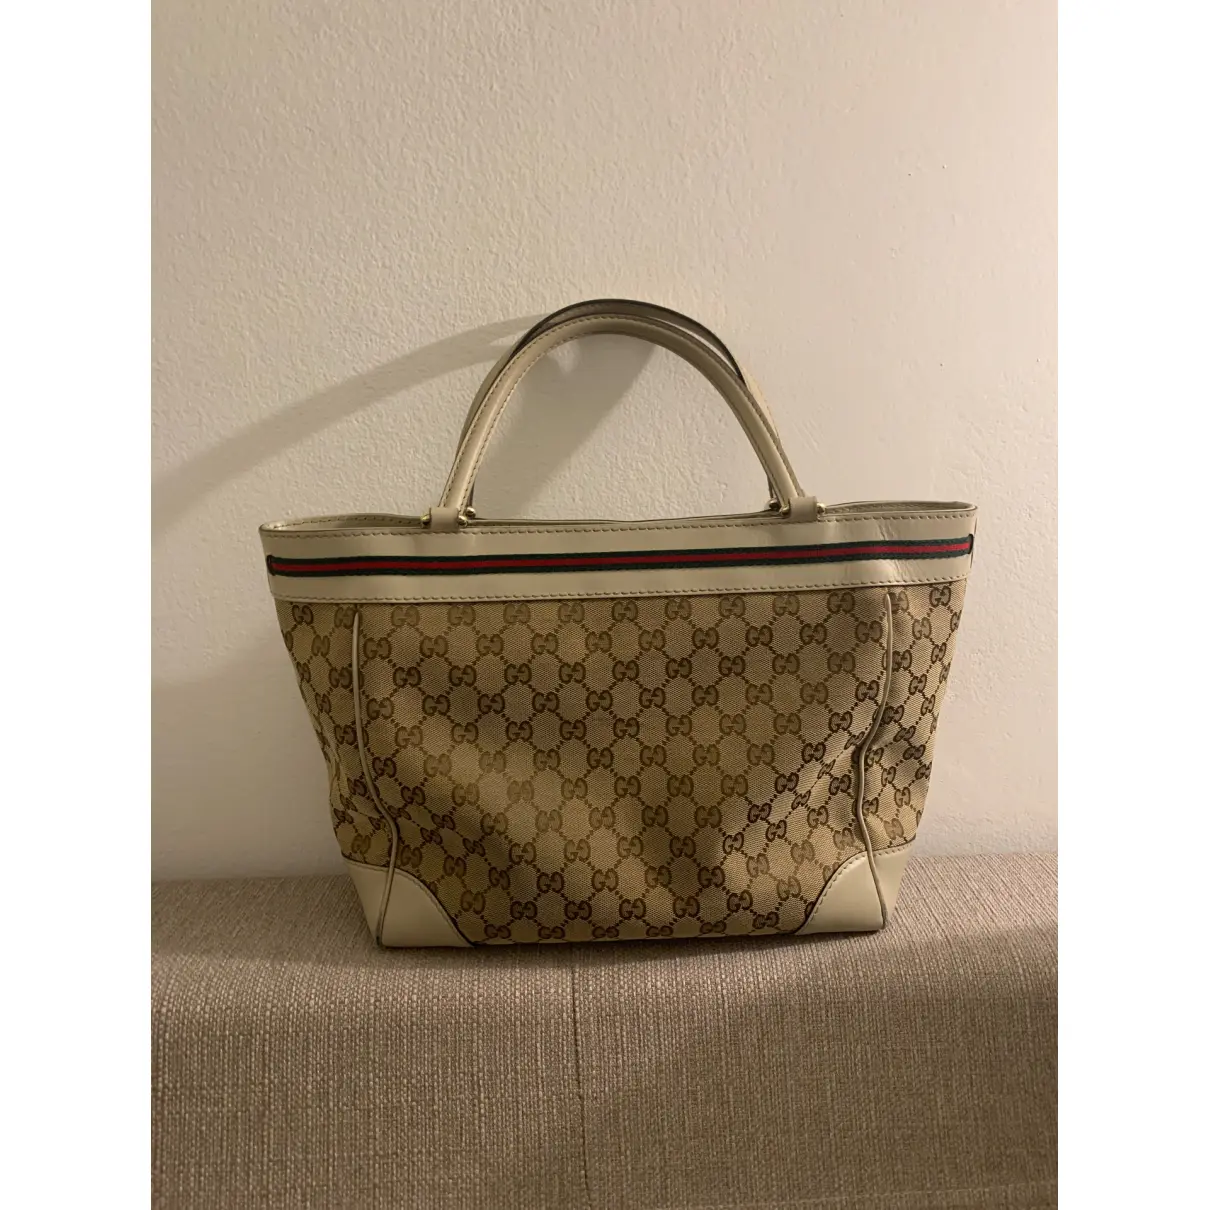 Buy Gucci Ophidia Shopping cloth handbag online